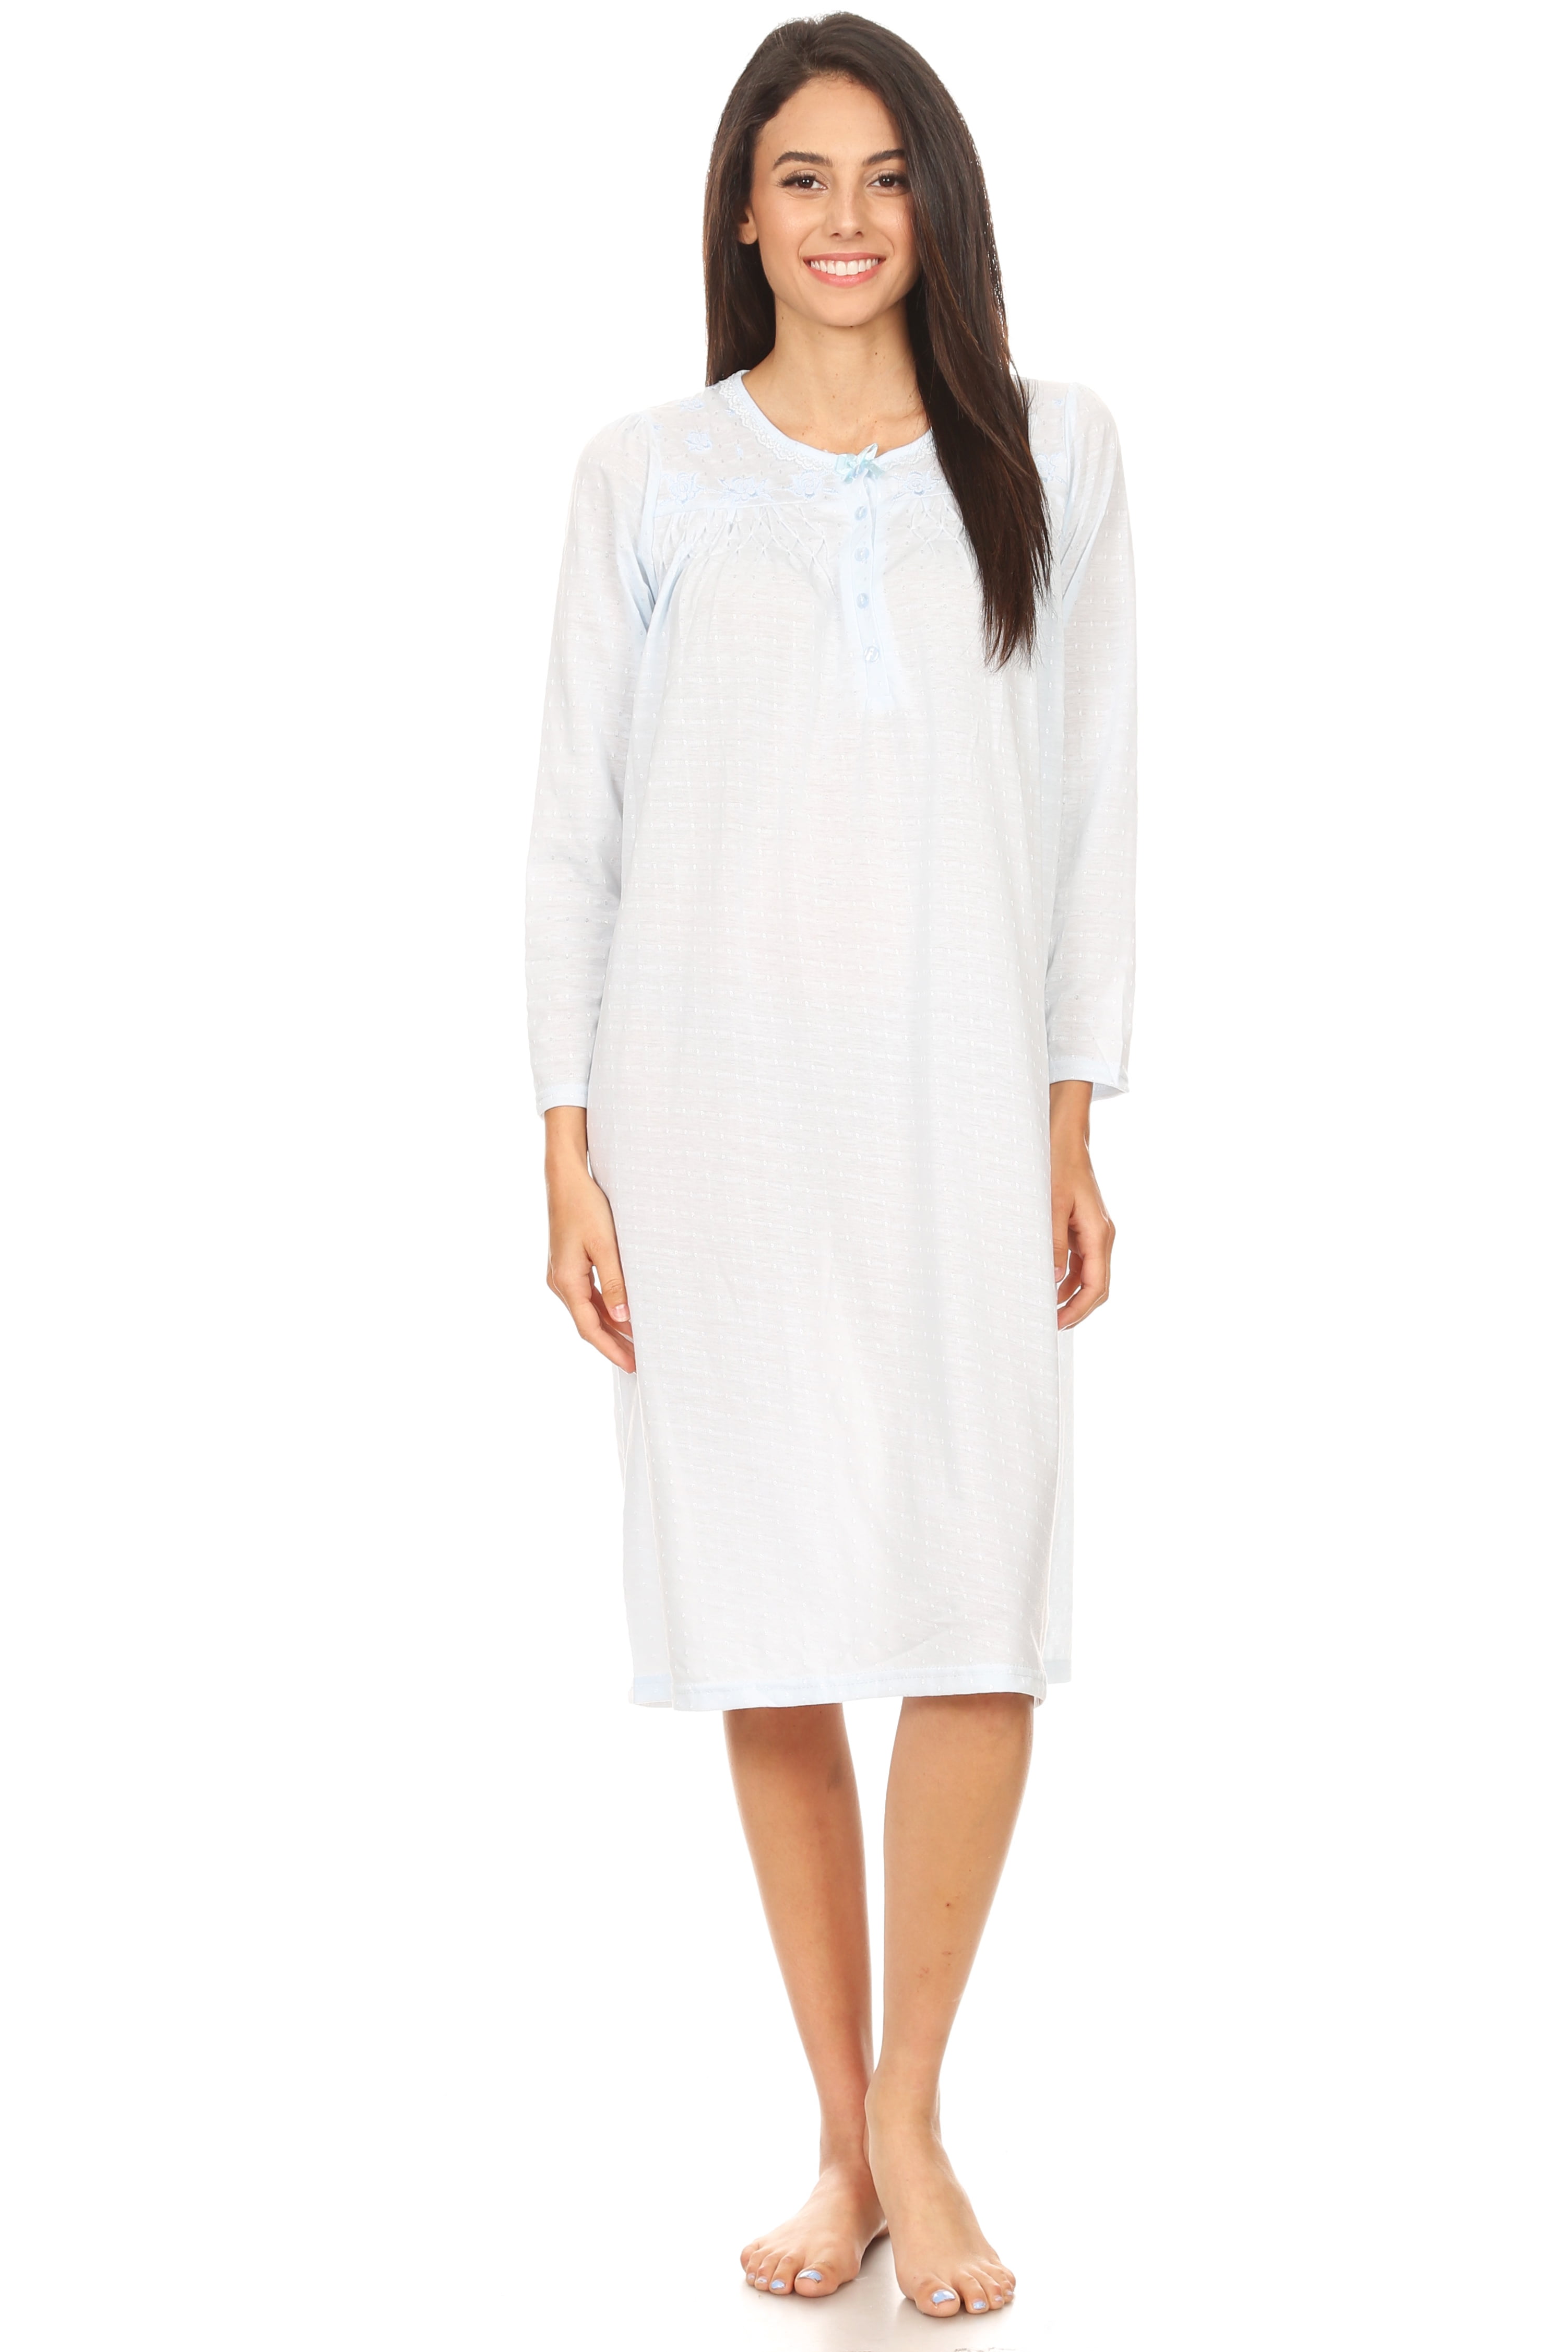 652 Womens Nightgown Sleepwear Pajamas Woman Long Sleeve Sleep Dress ...